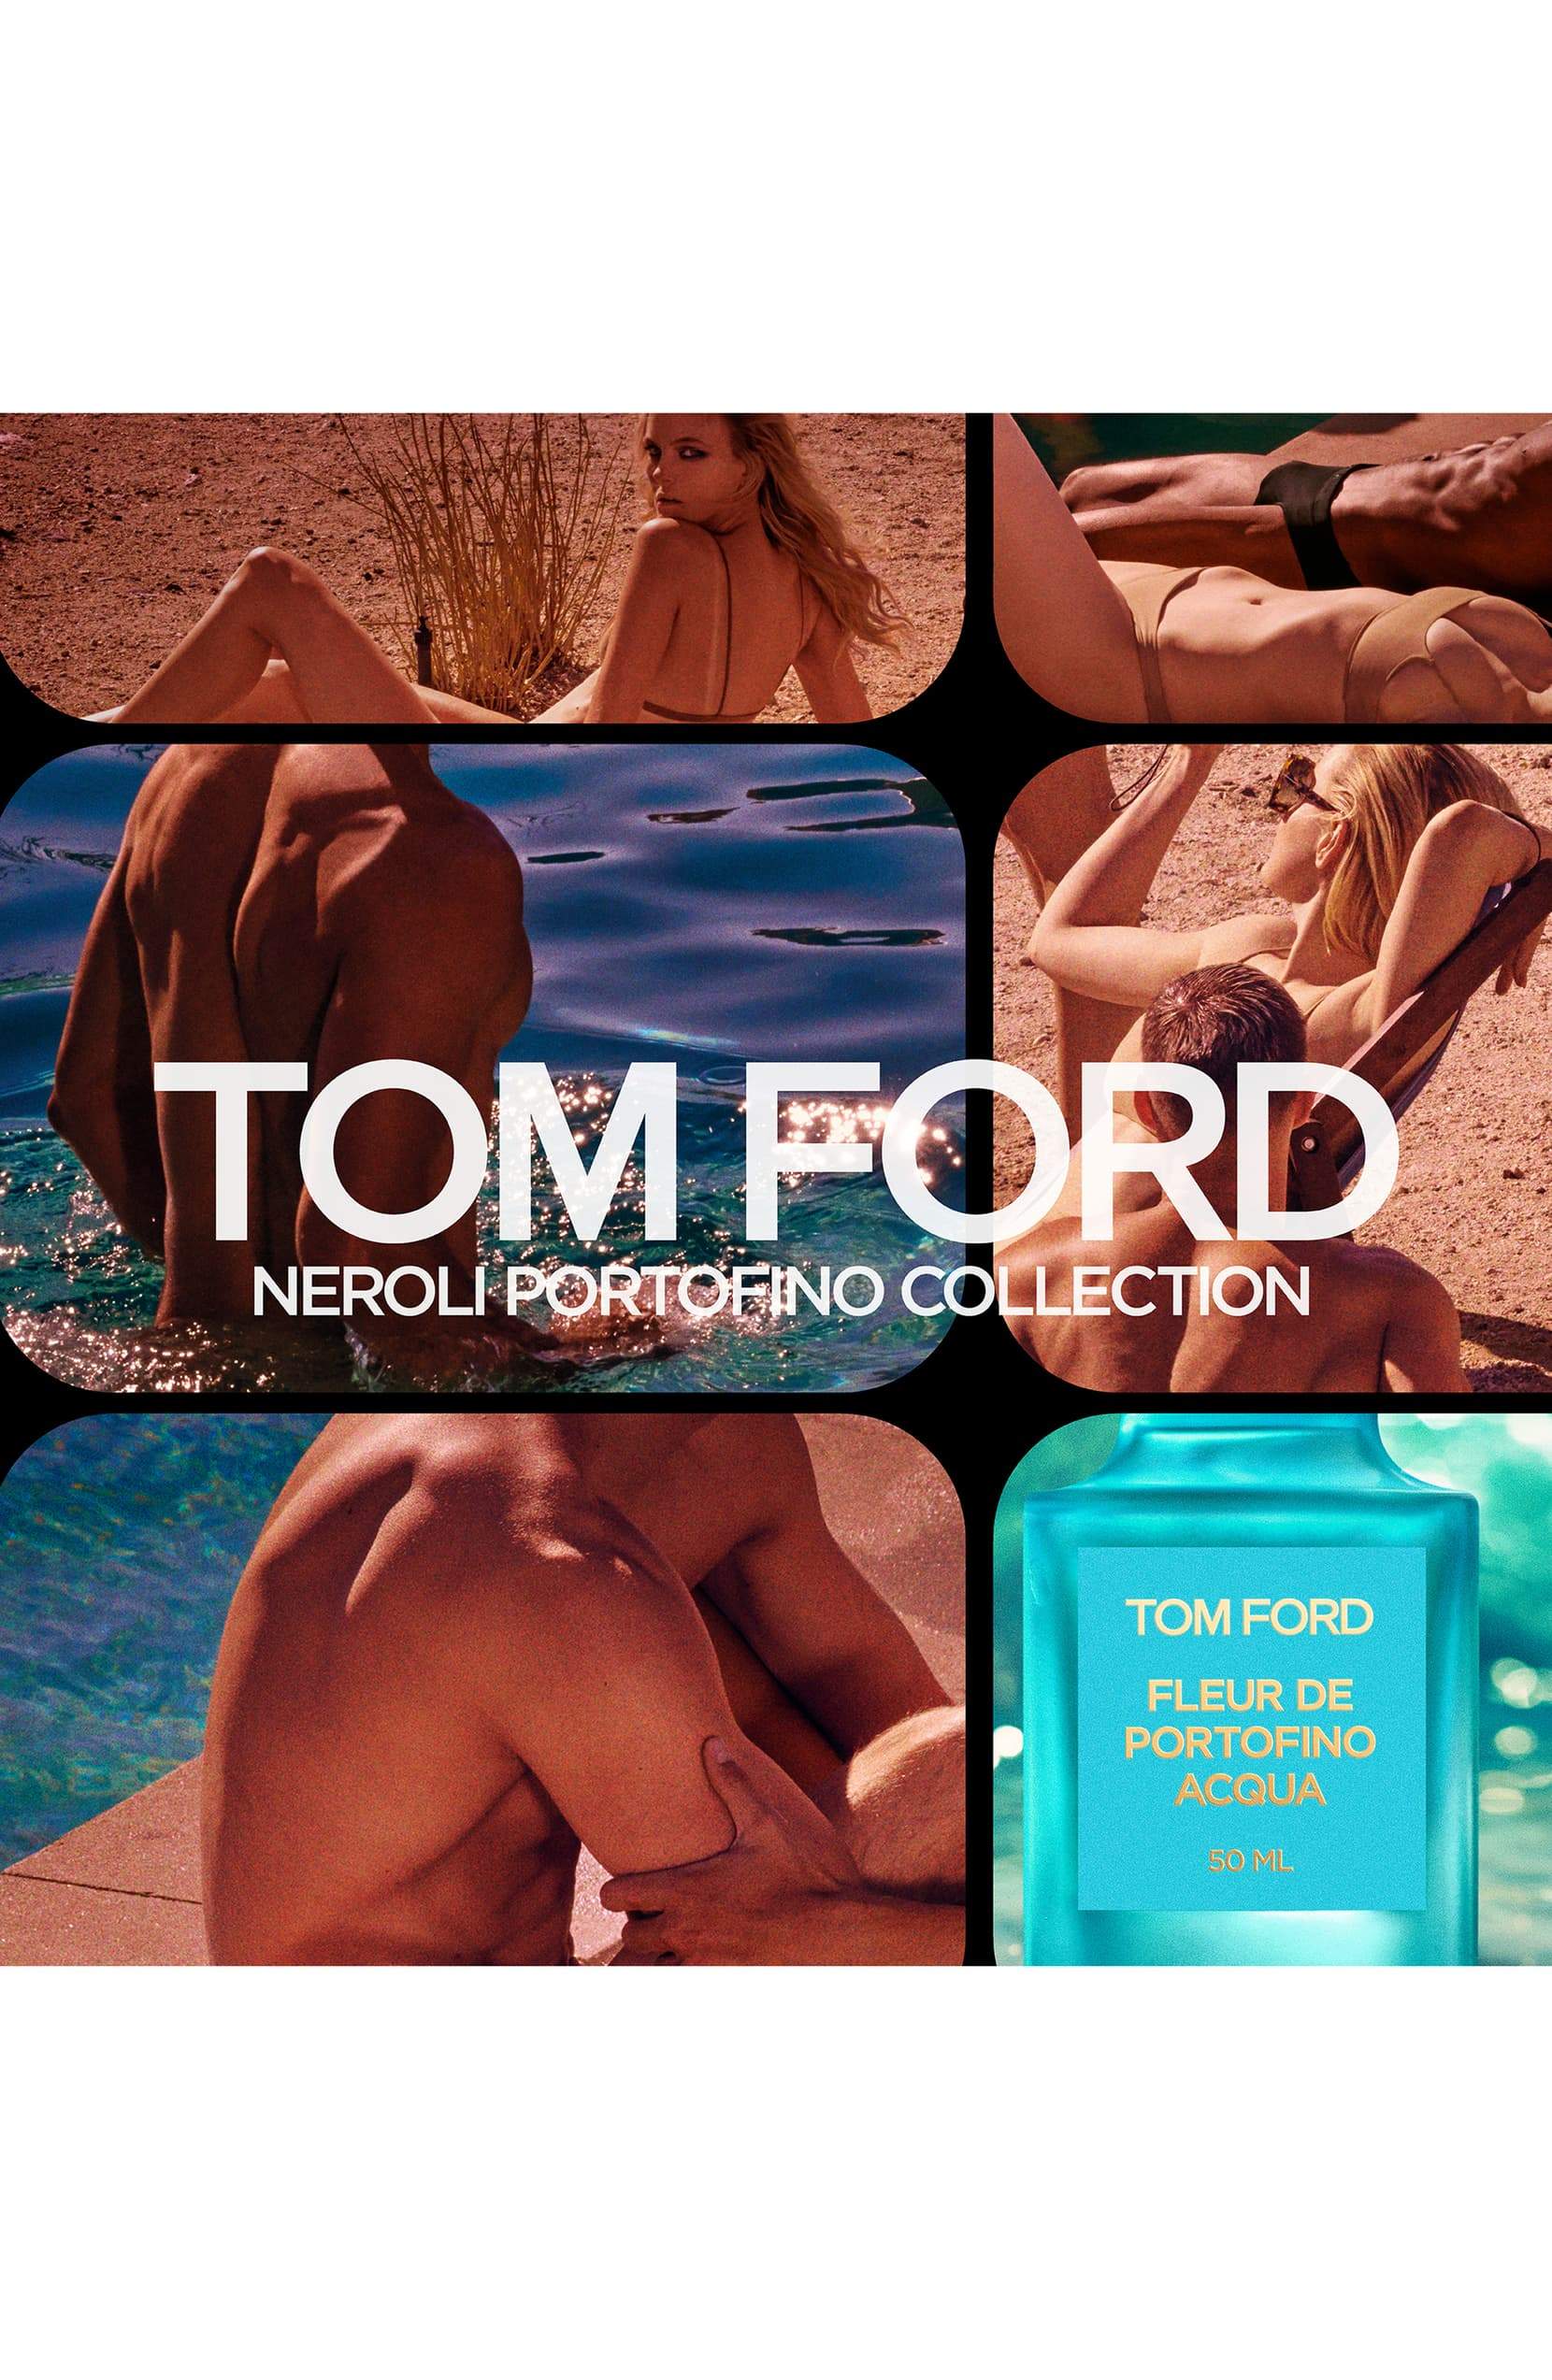 Tom Ford Neroli Portofino Acqua Eau de Toilette Spray 1.7 oz